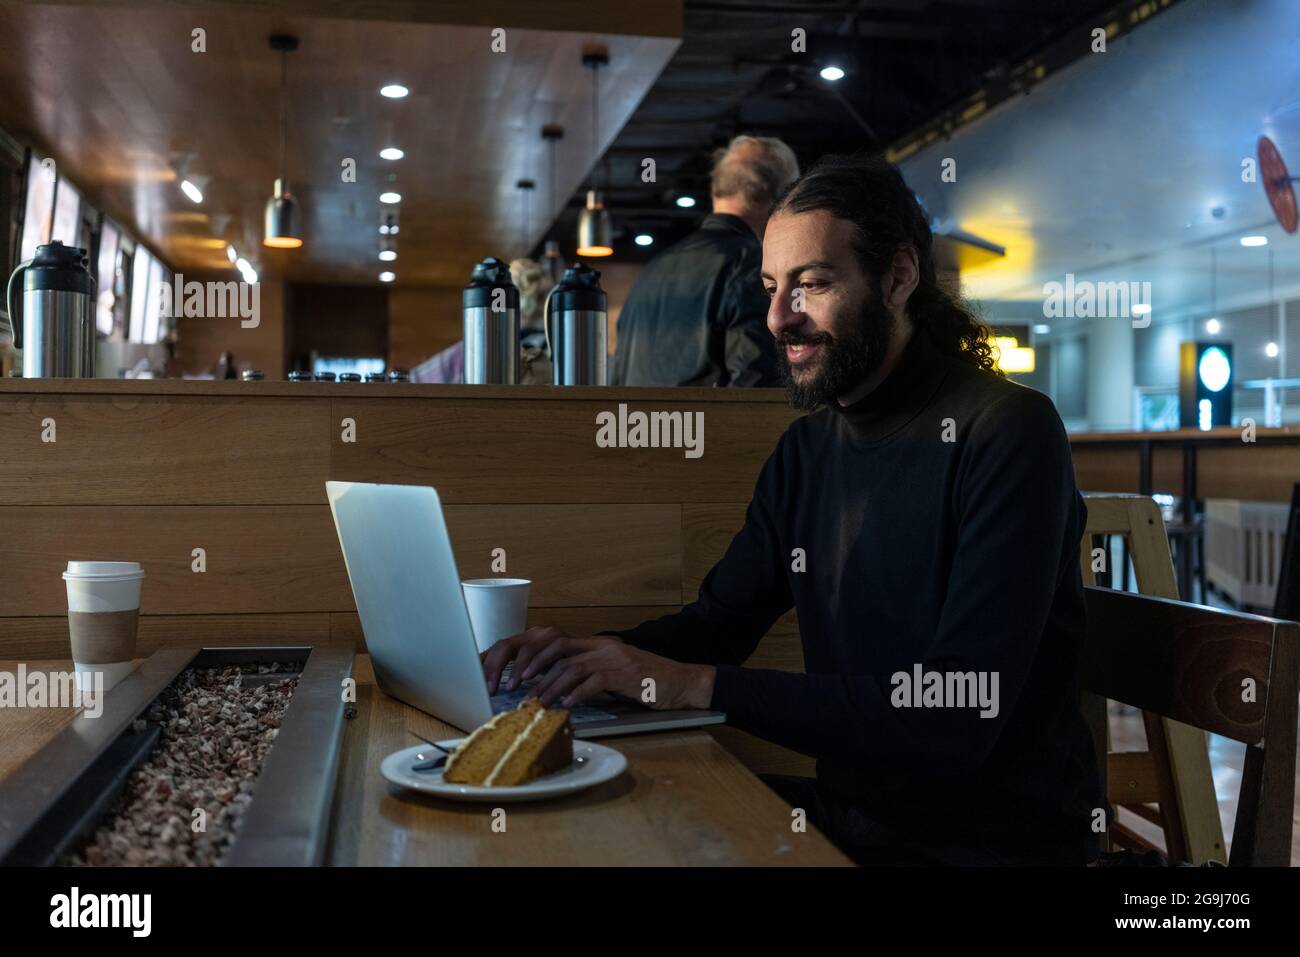 UK, London, Man using laptop at airport cafe Stock Photo